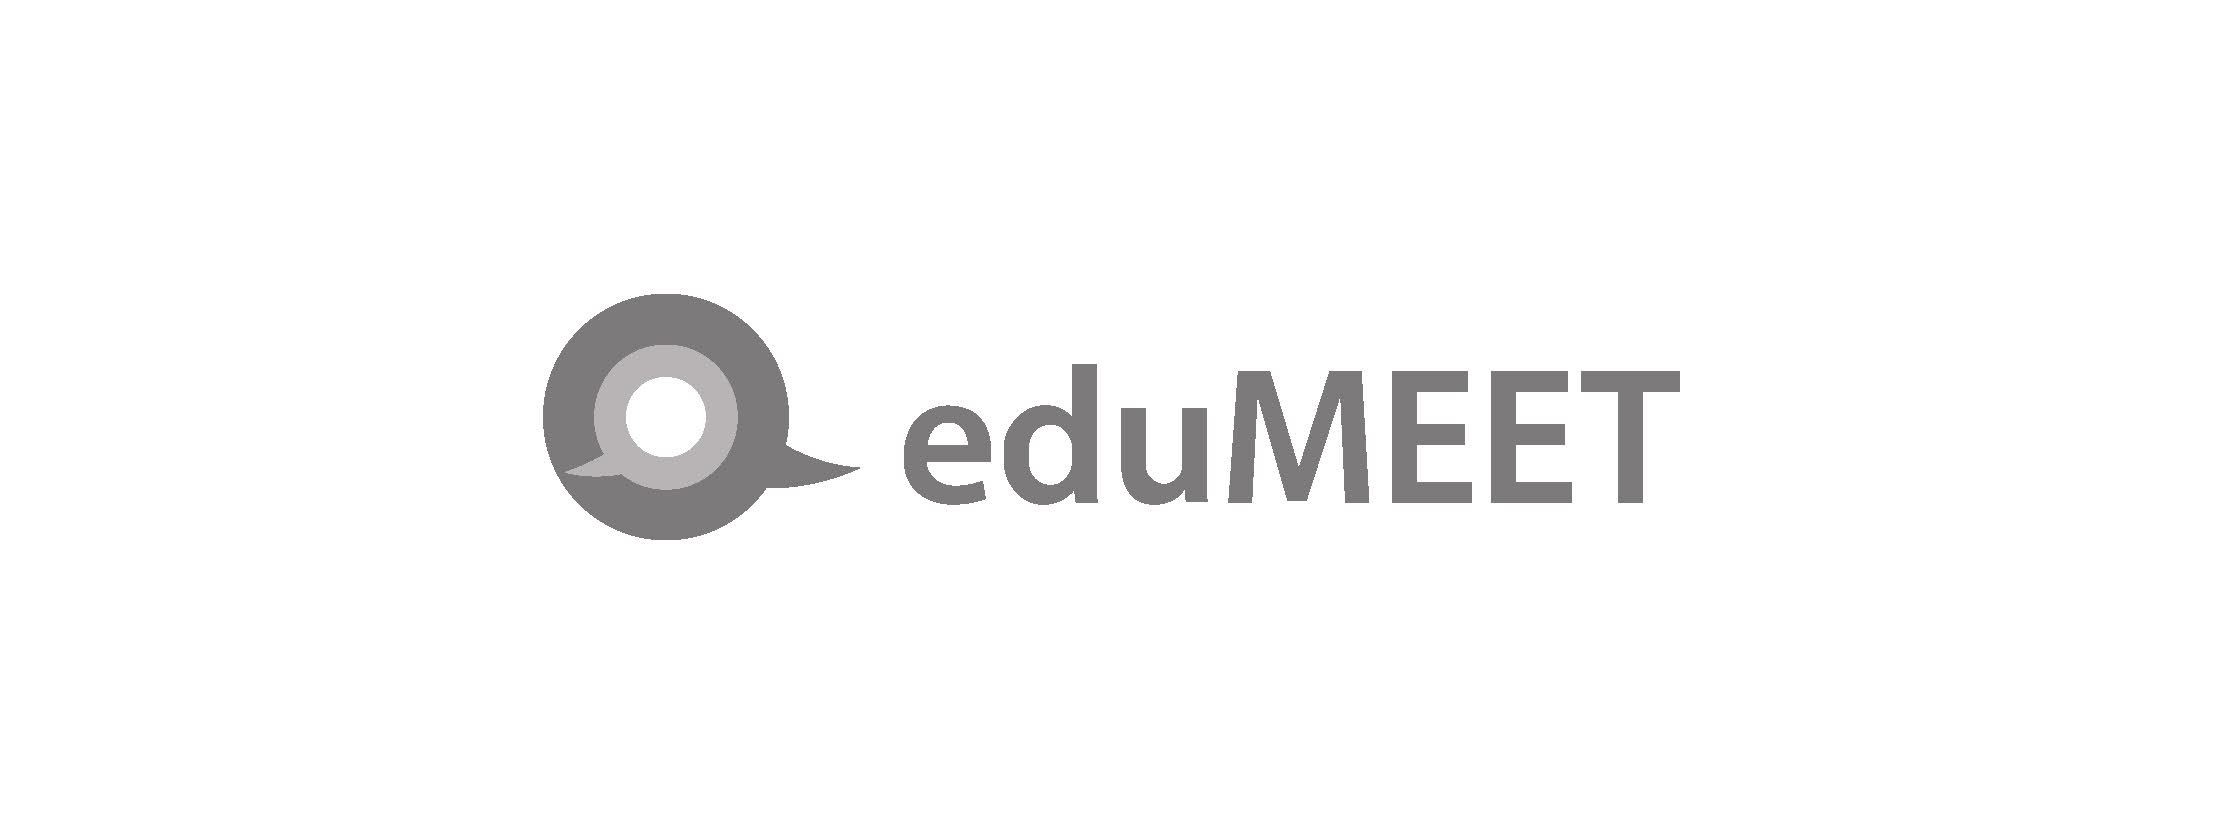 eduMEET Logo